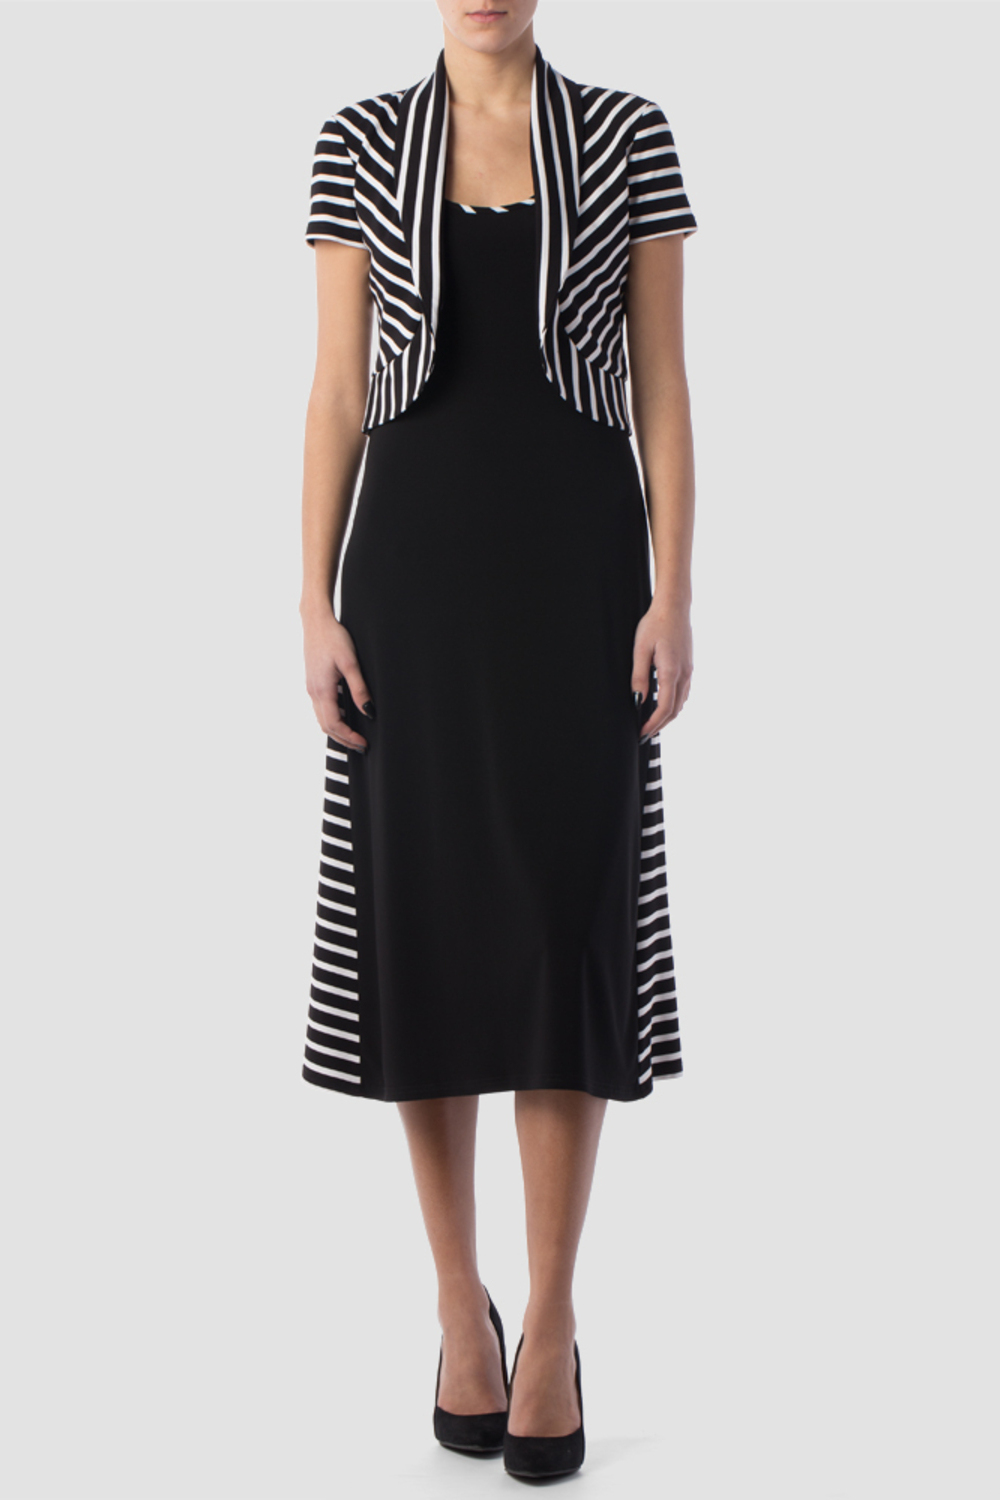 Joseph Ribkoff dress style 152909. Black/white